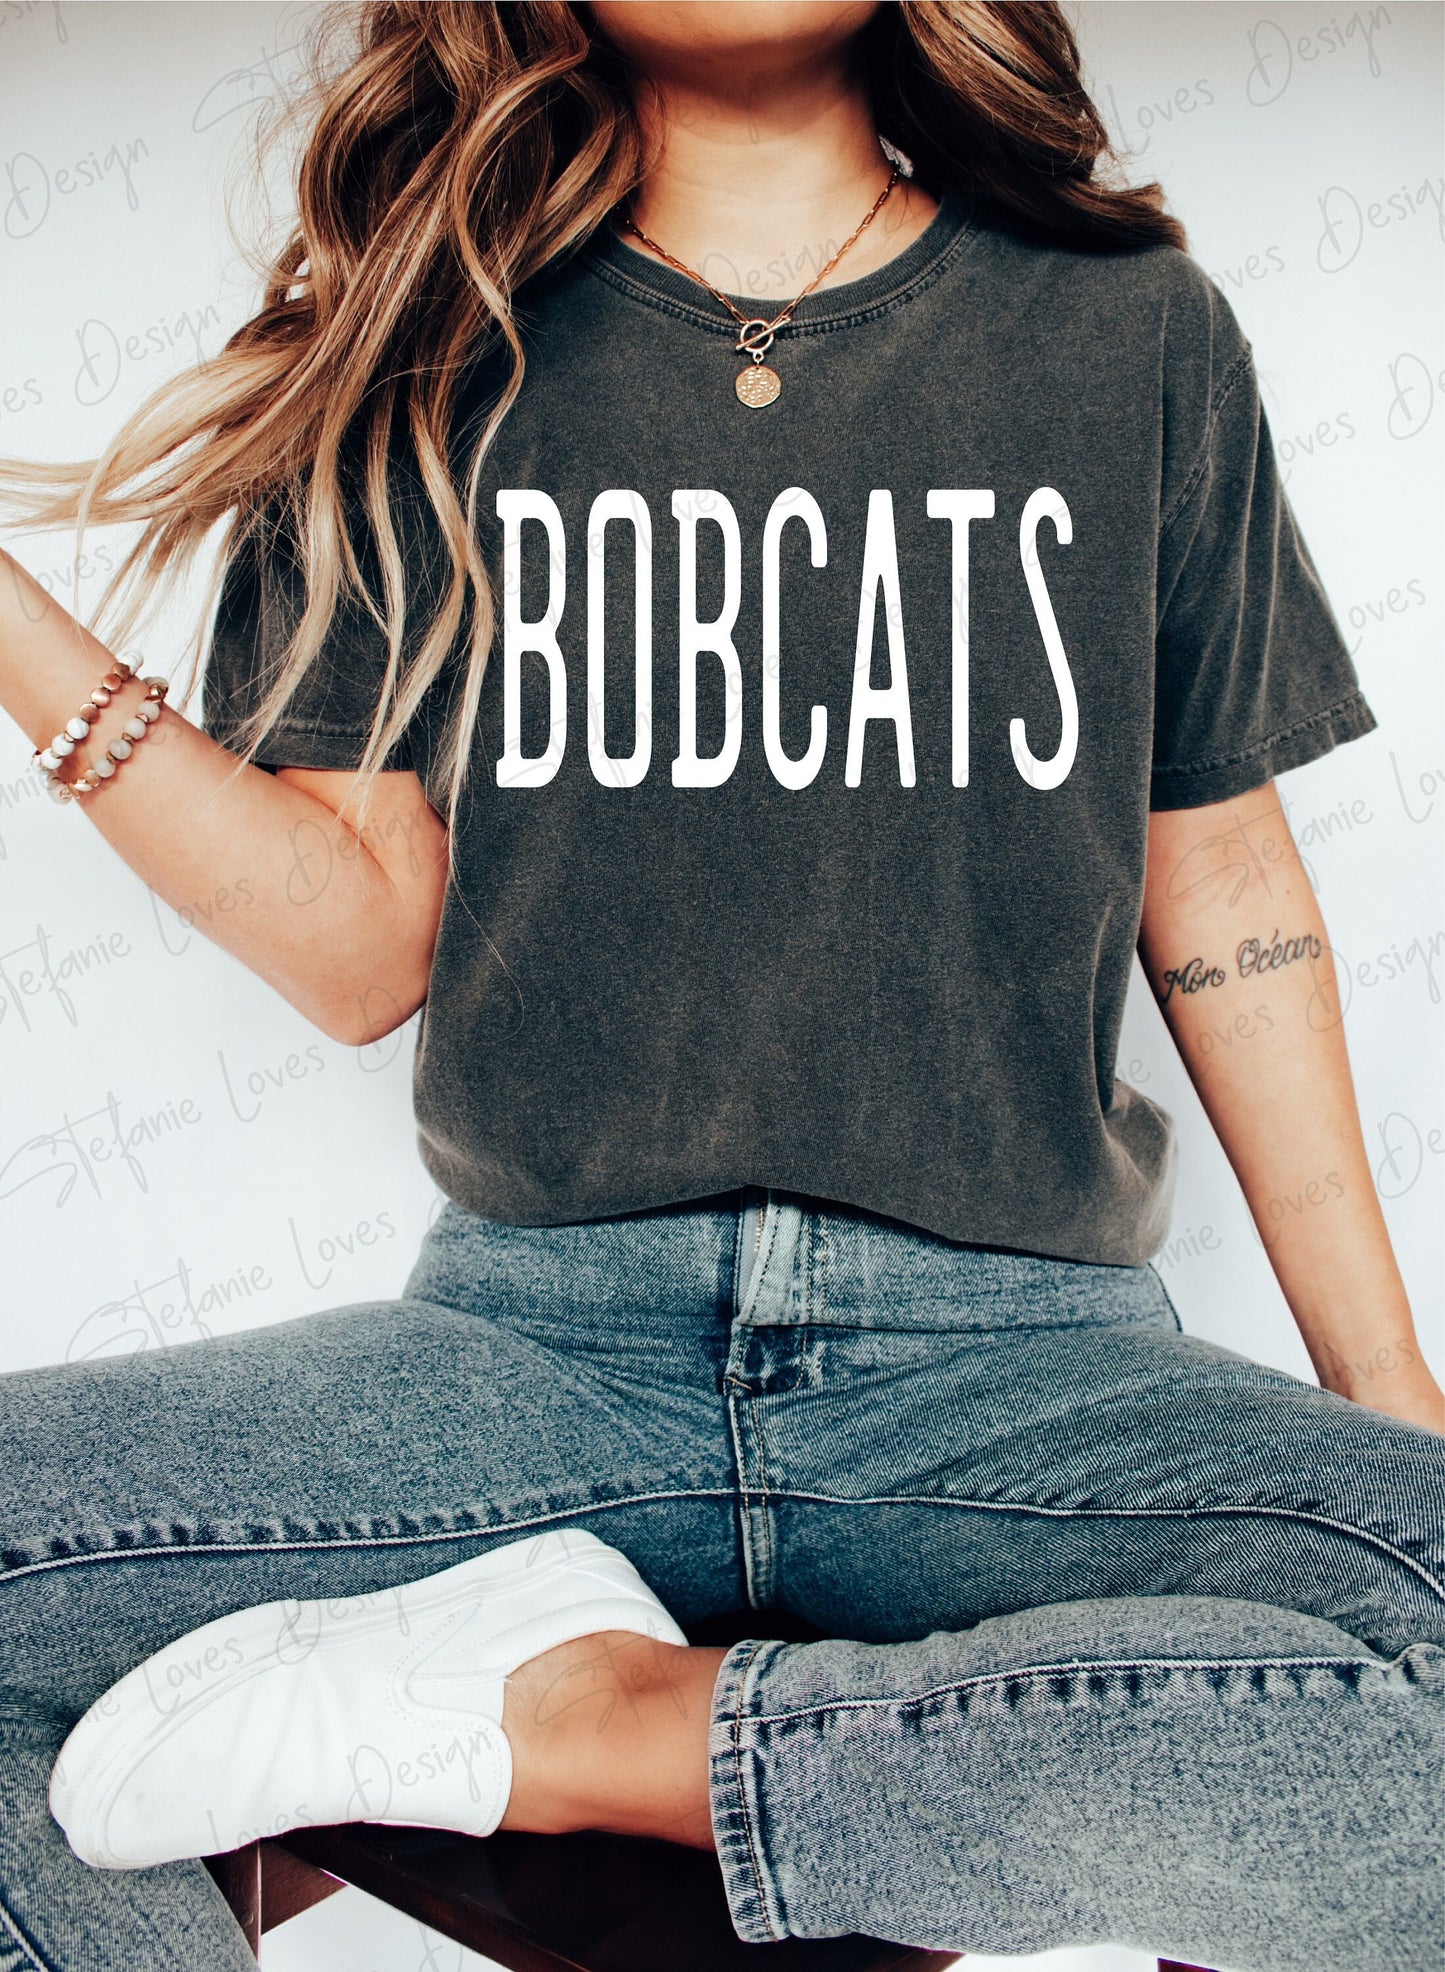 BOBCATS svg, Bobcats Outline svg, Bobcats shirt svg, Digital Design, Bobcats Mascot